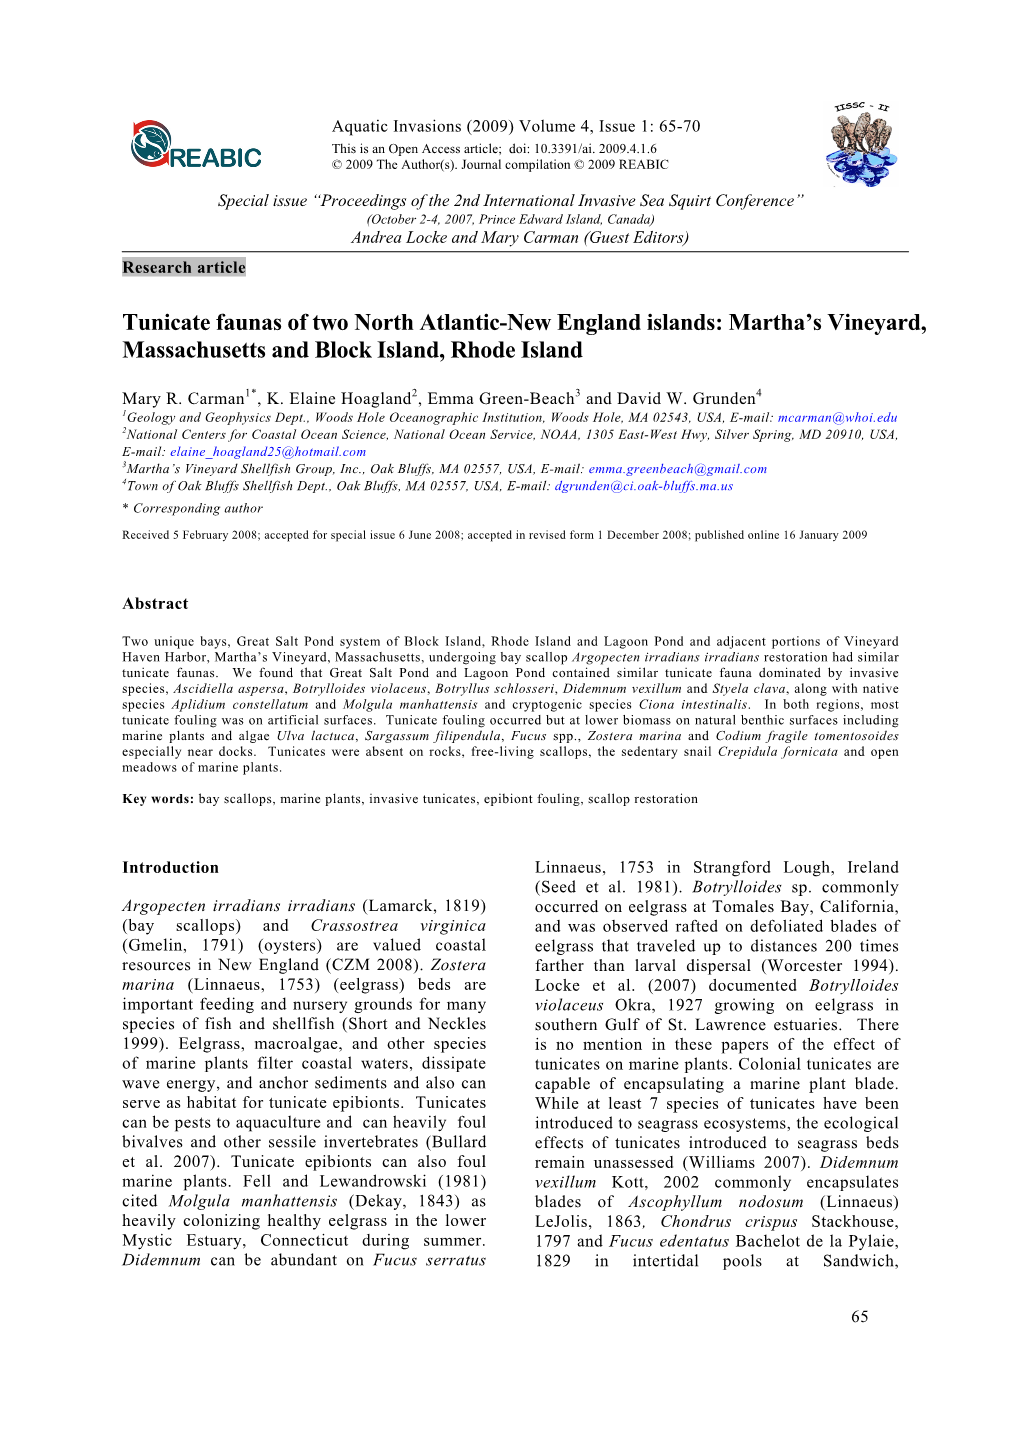 Tunicate Faunas of Two North Atlantic-New England Islands: Martha’S Vineyard, Massachusetts and Block Island, Rhode Island